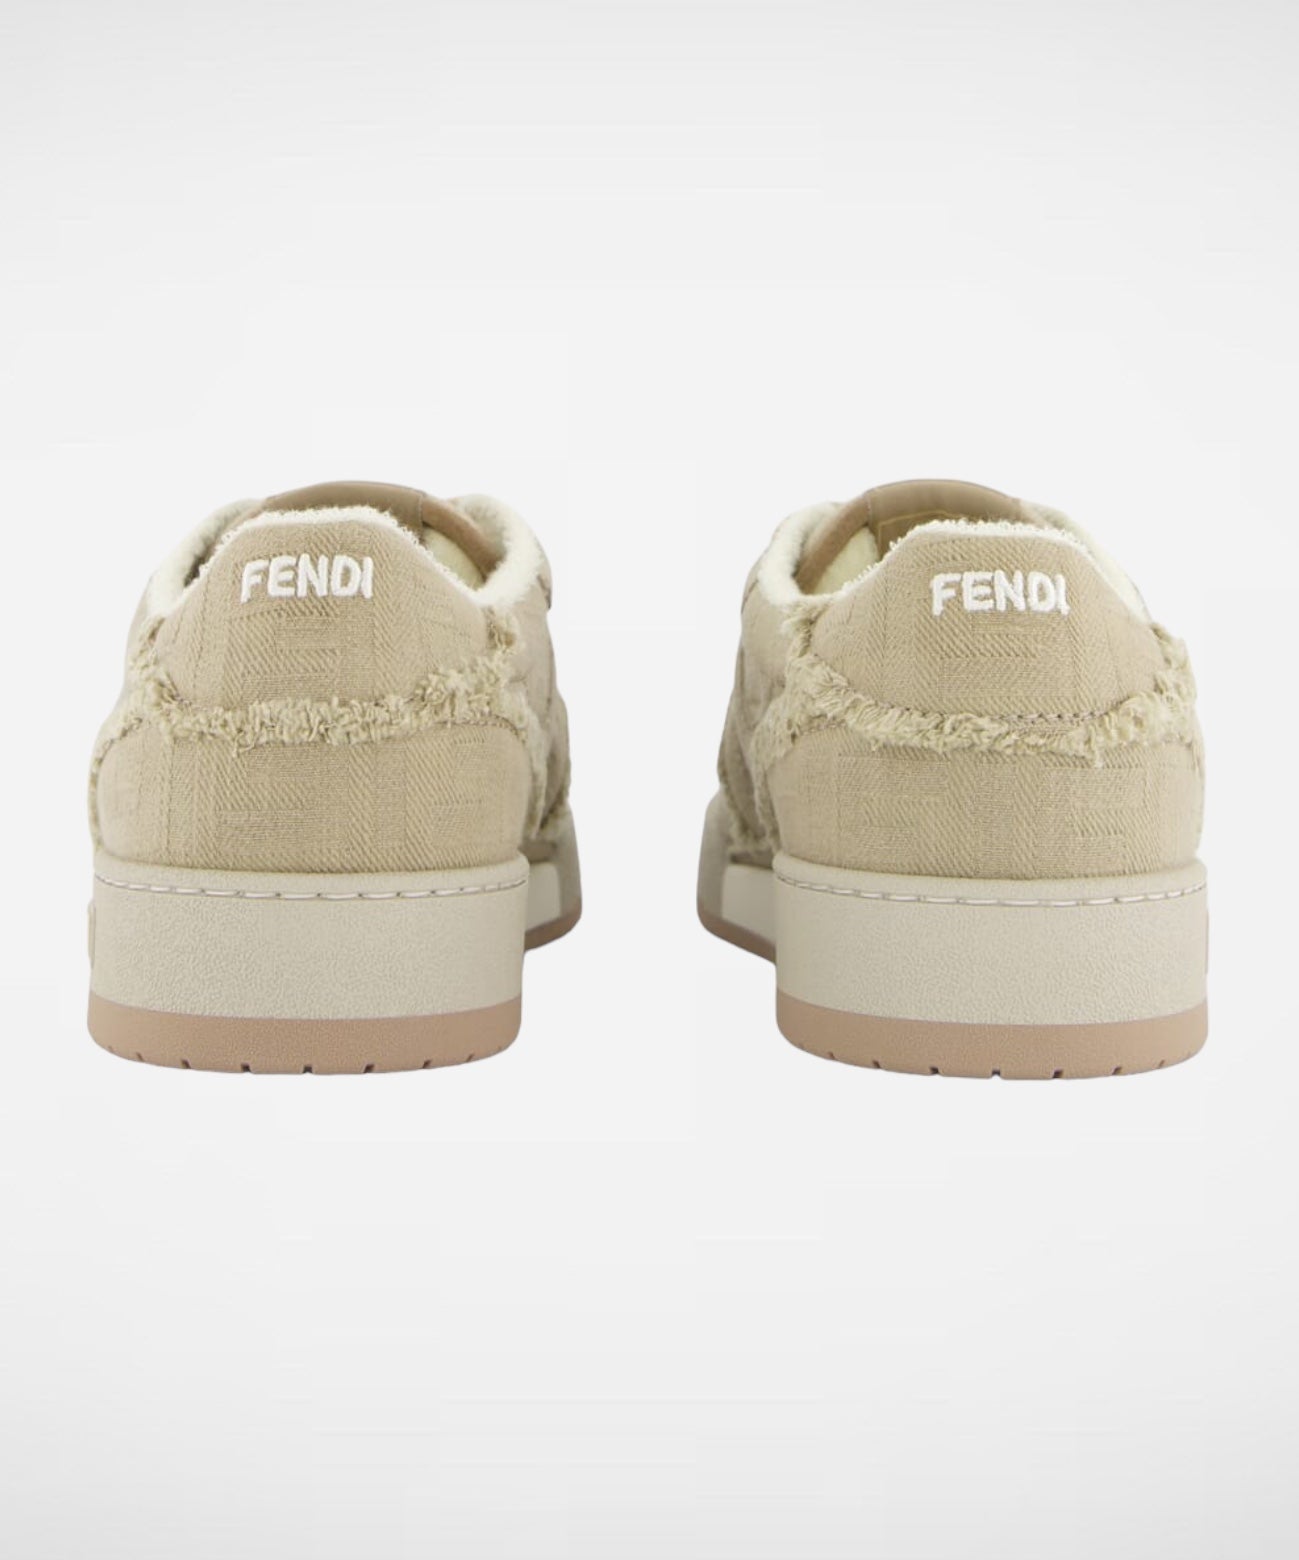 Fendi Grey Calf Leather Low Top Sneakers